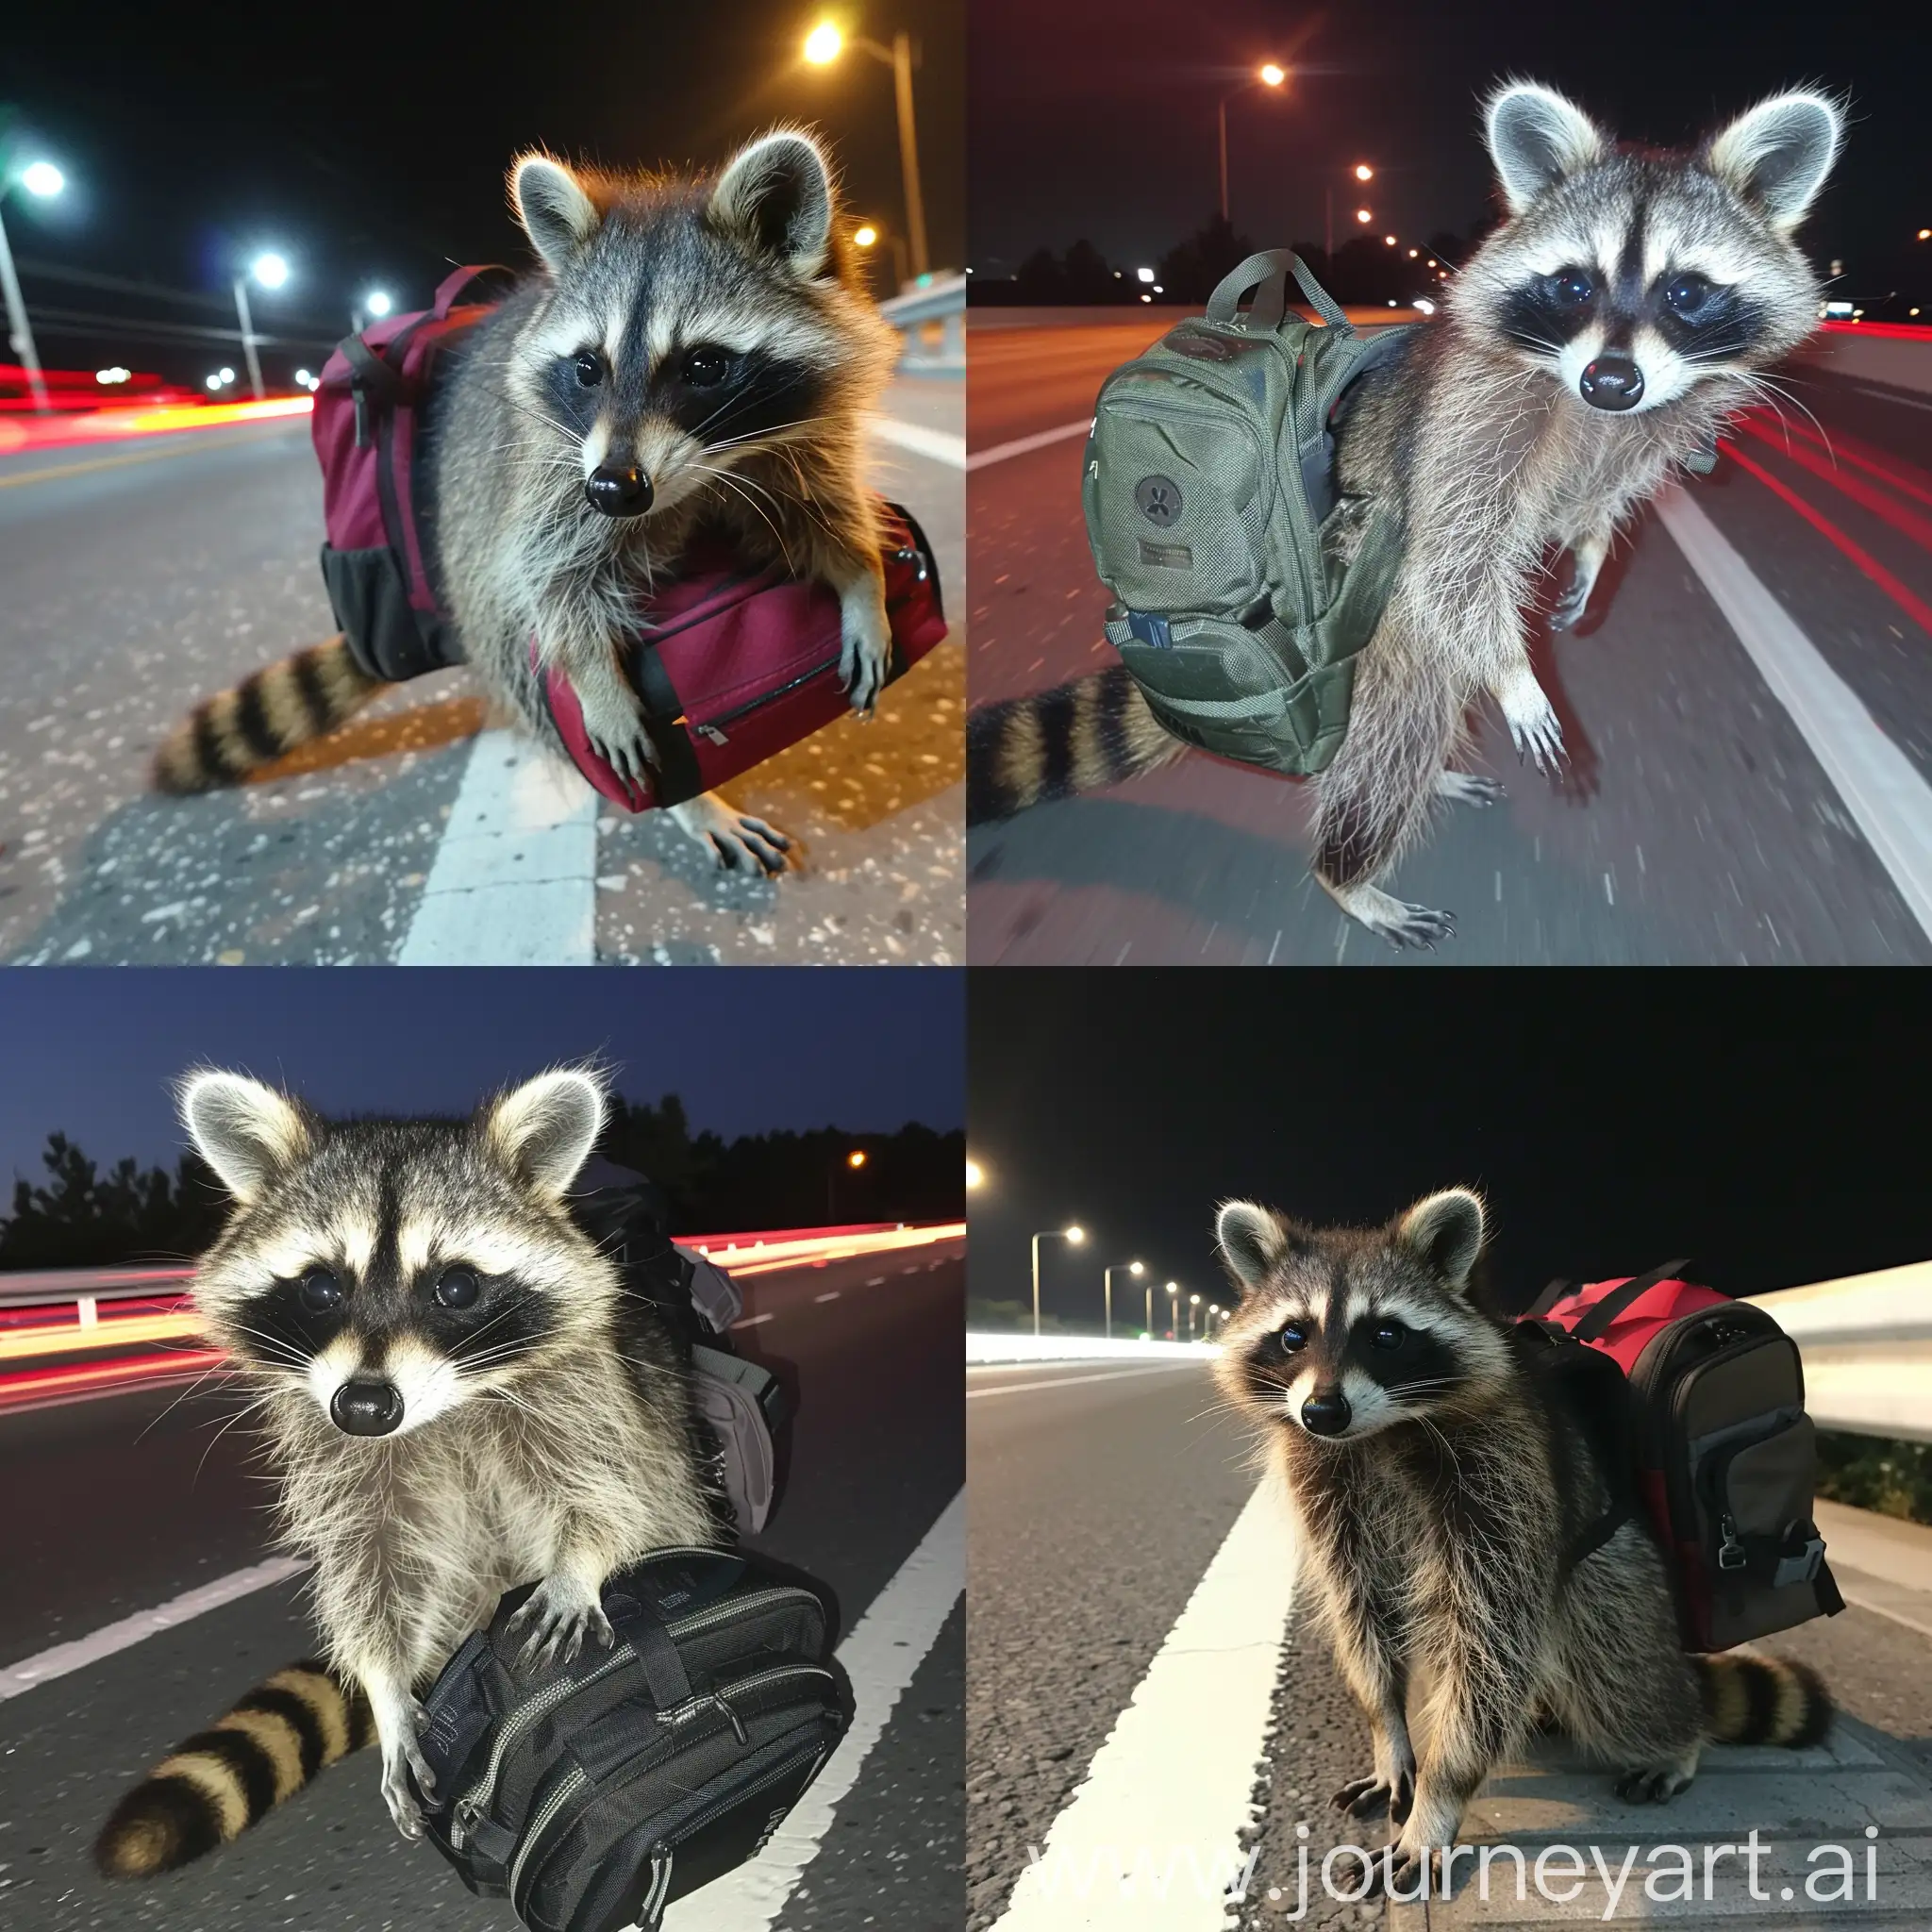 NightAdventurous-Raccoon-with-Backpack-on-the-Highway